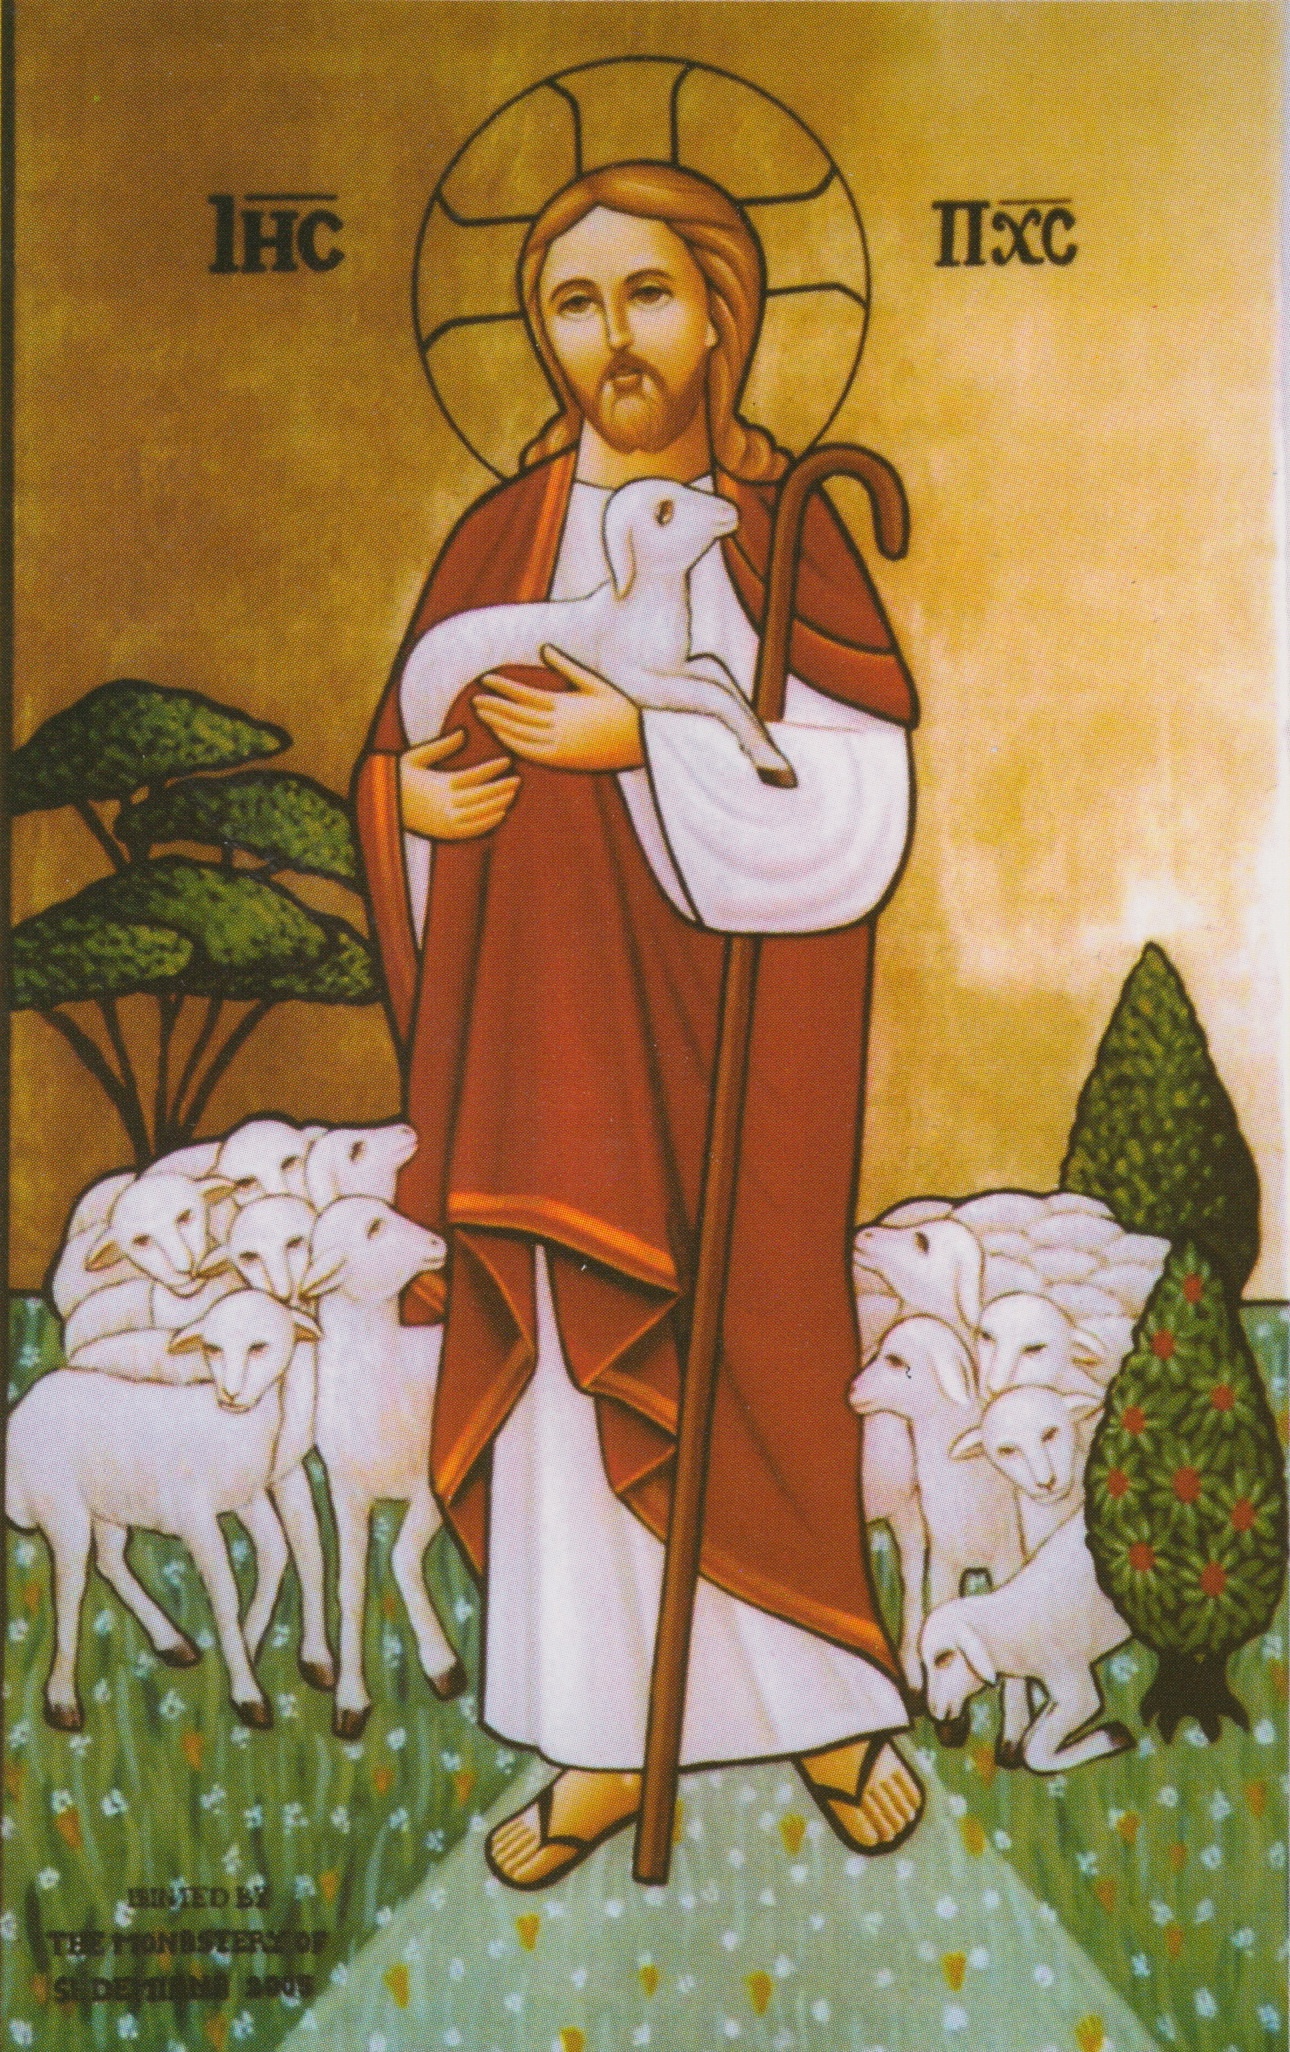 The Good Shephard dans images sacrée